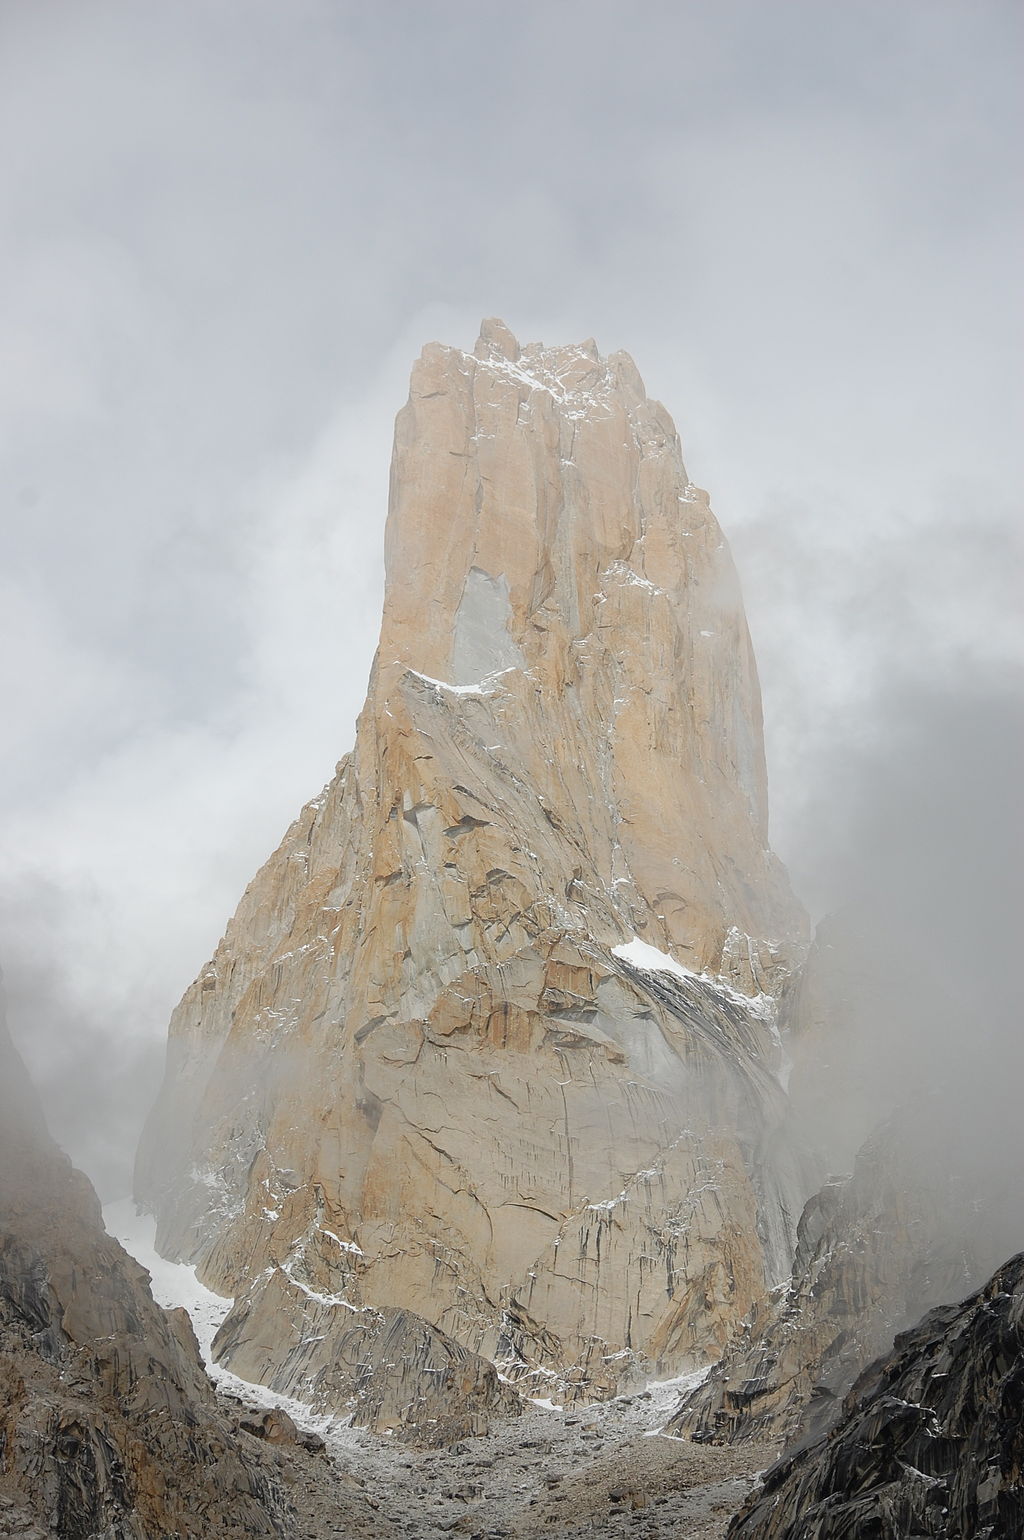 The Nameless Tower, Trango Group in the Karakorams, north of the Baltoro glacier. Photo credit